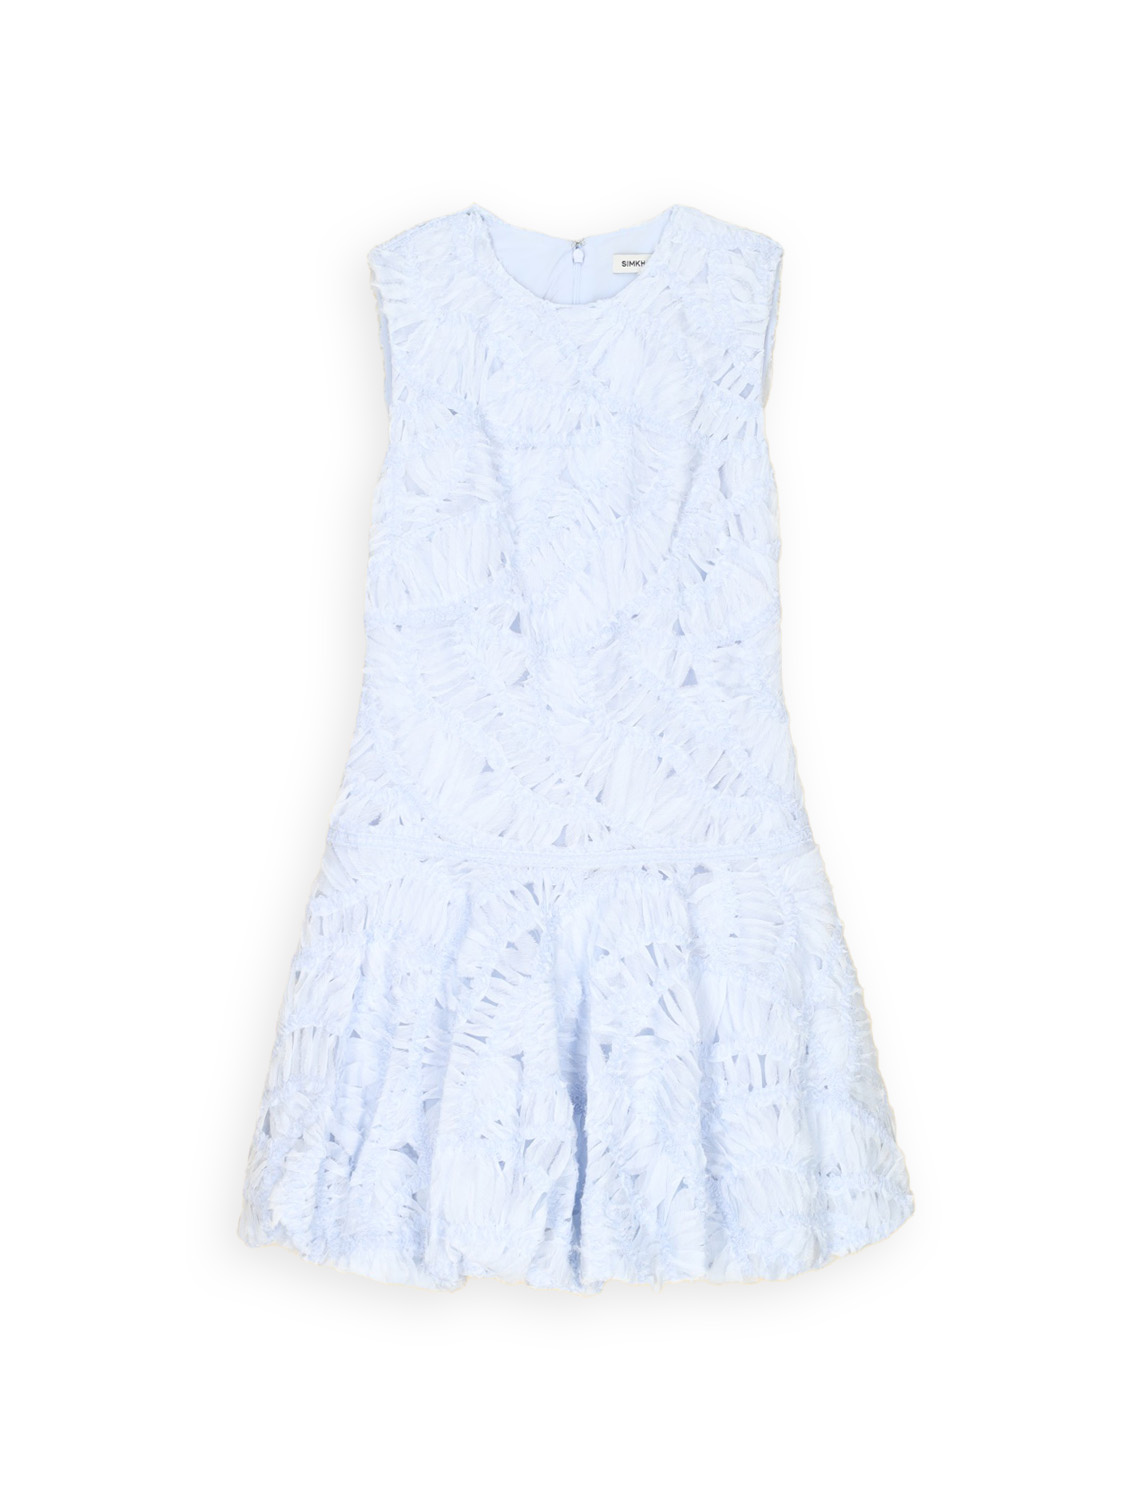 Simkhai Vallan – Mini dress with delicate lace   blue 36